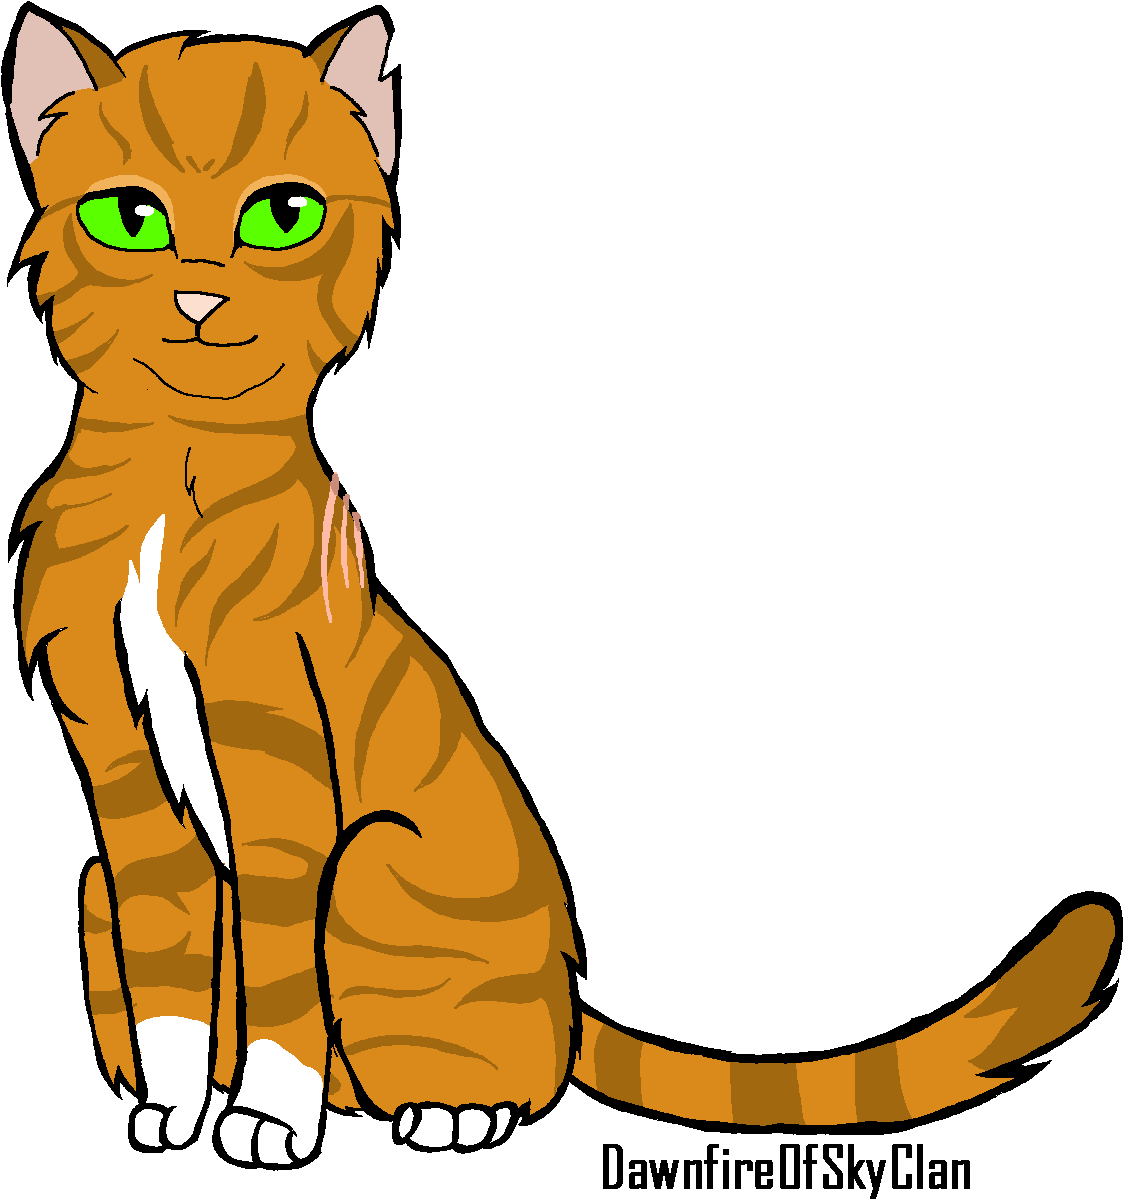 Dawnstar - Domestic Short-haired Cat (1189x1267)